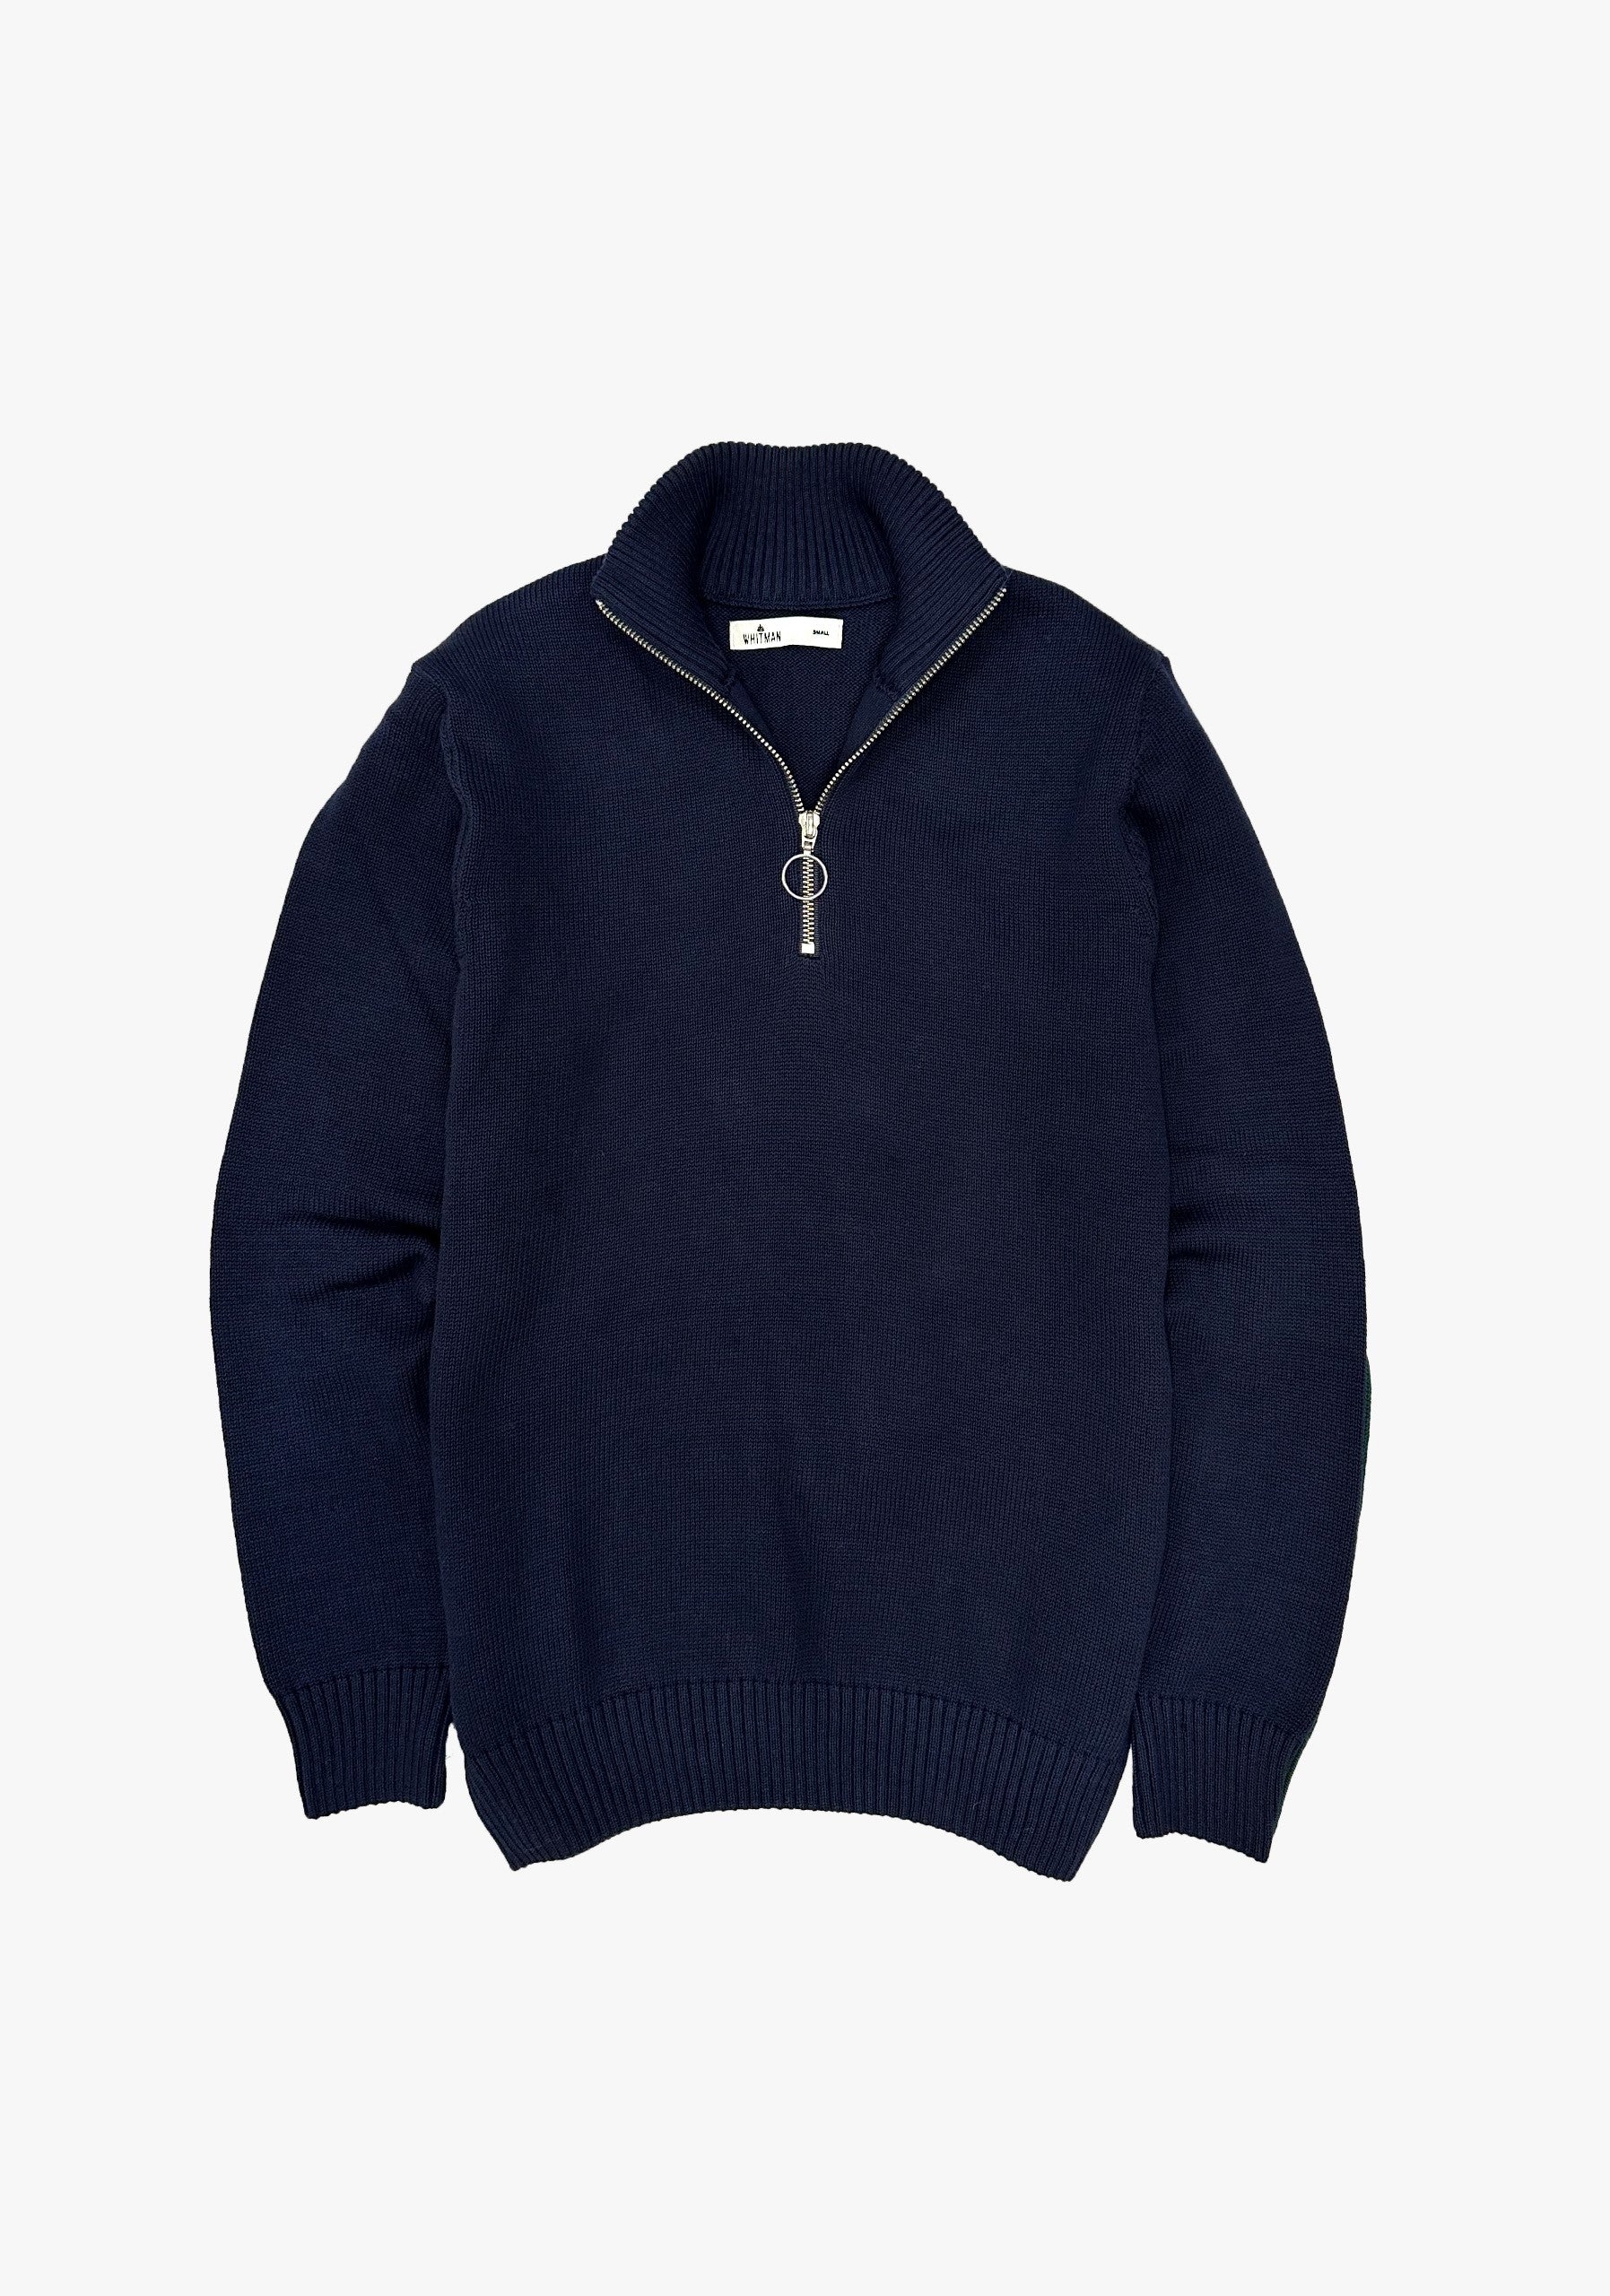 Phoenix NV Dark Blue Sweater